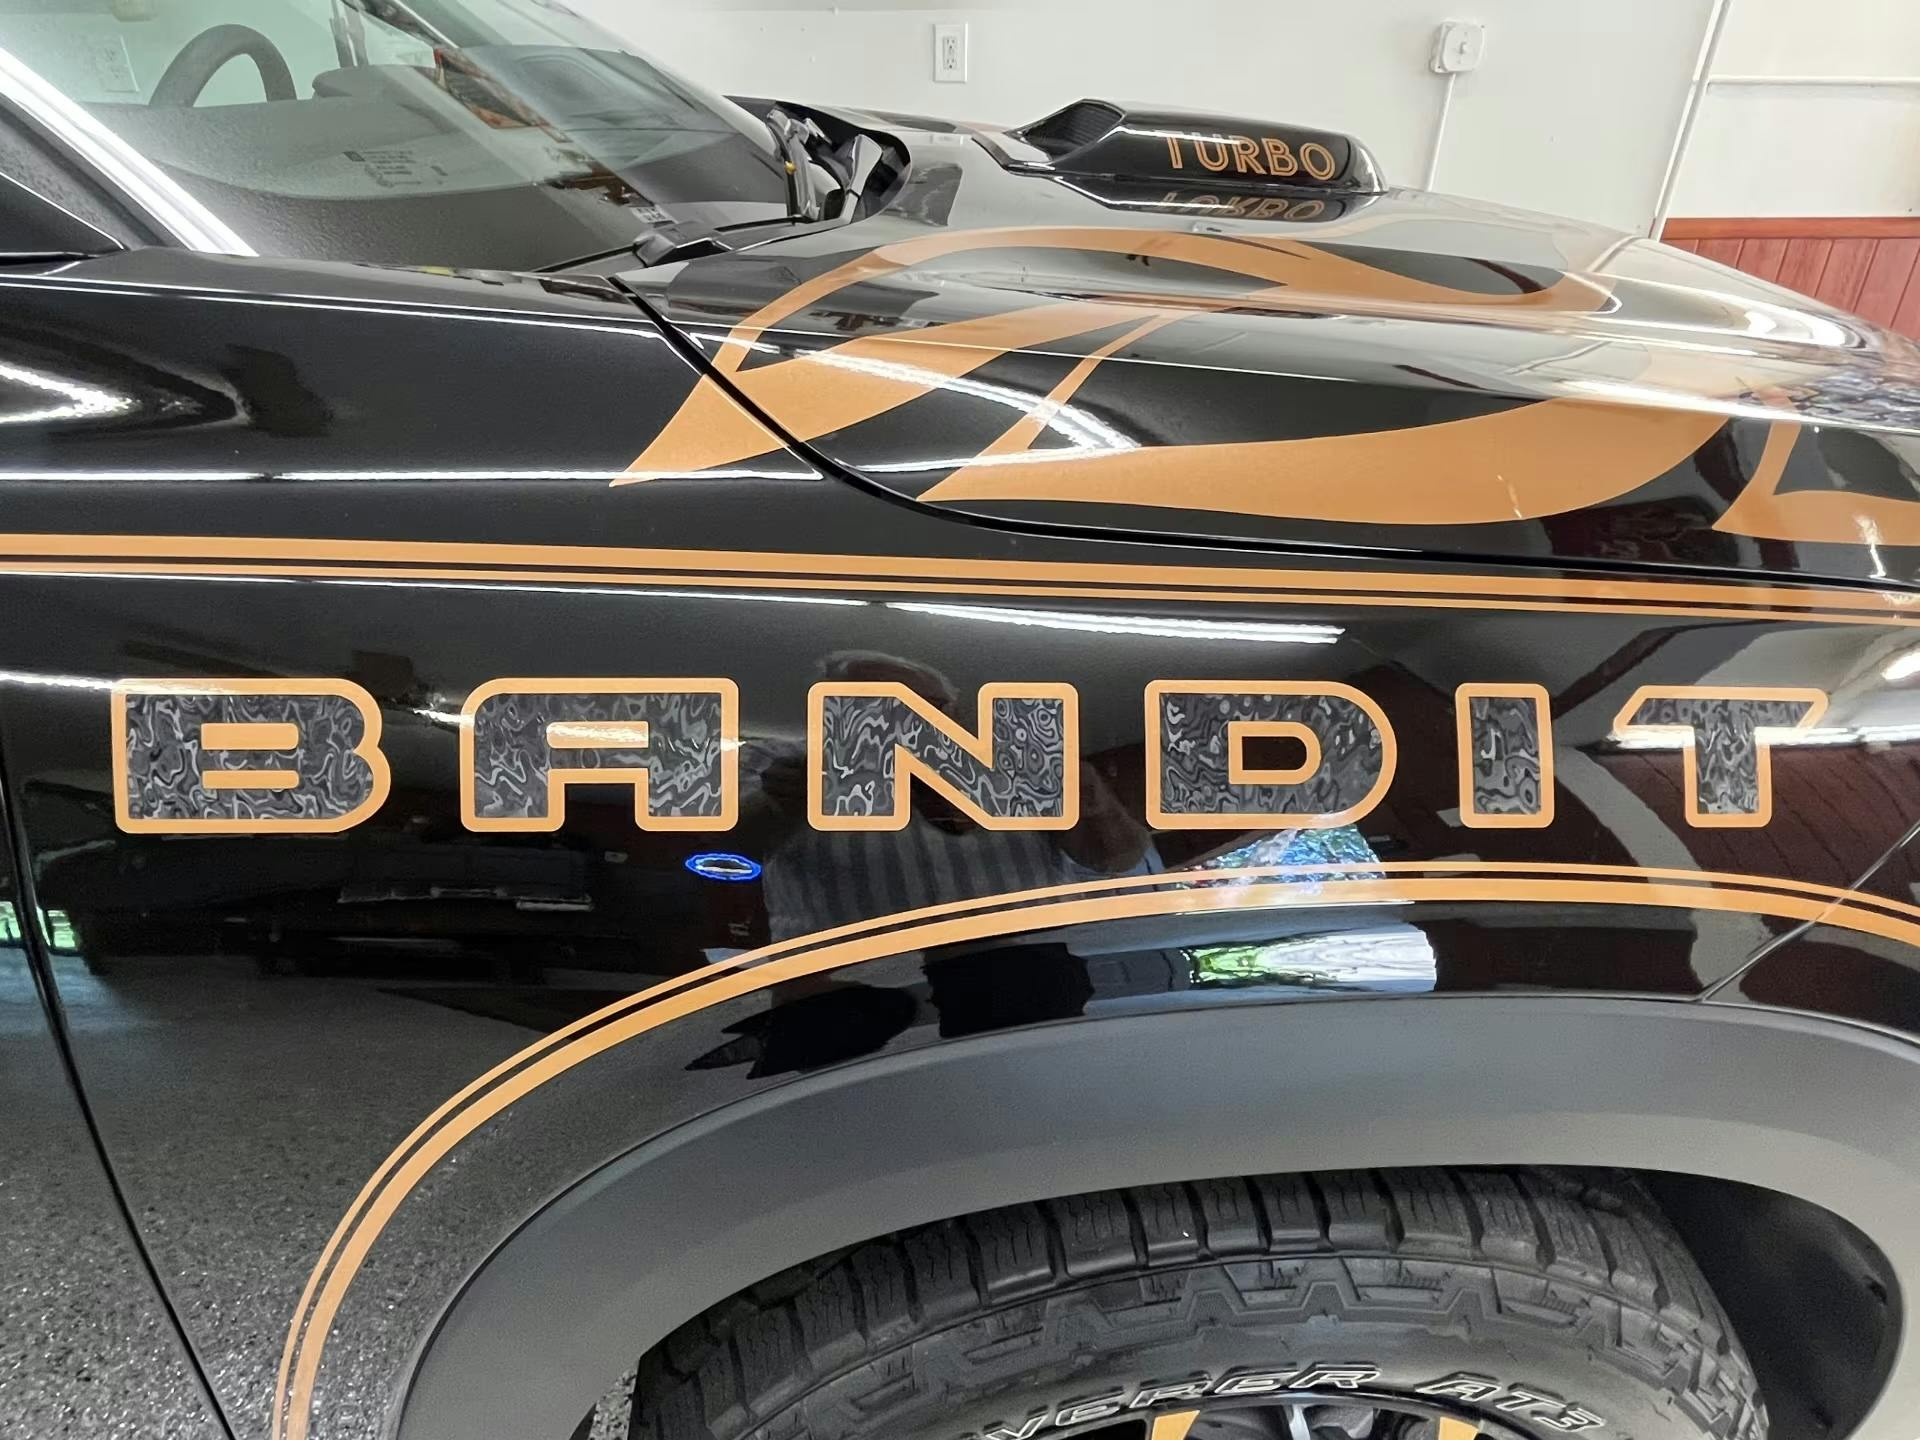 Chevrolet Trax Bandit Edition lettering